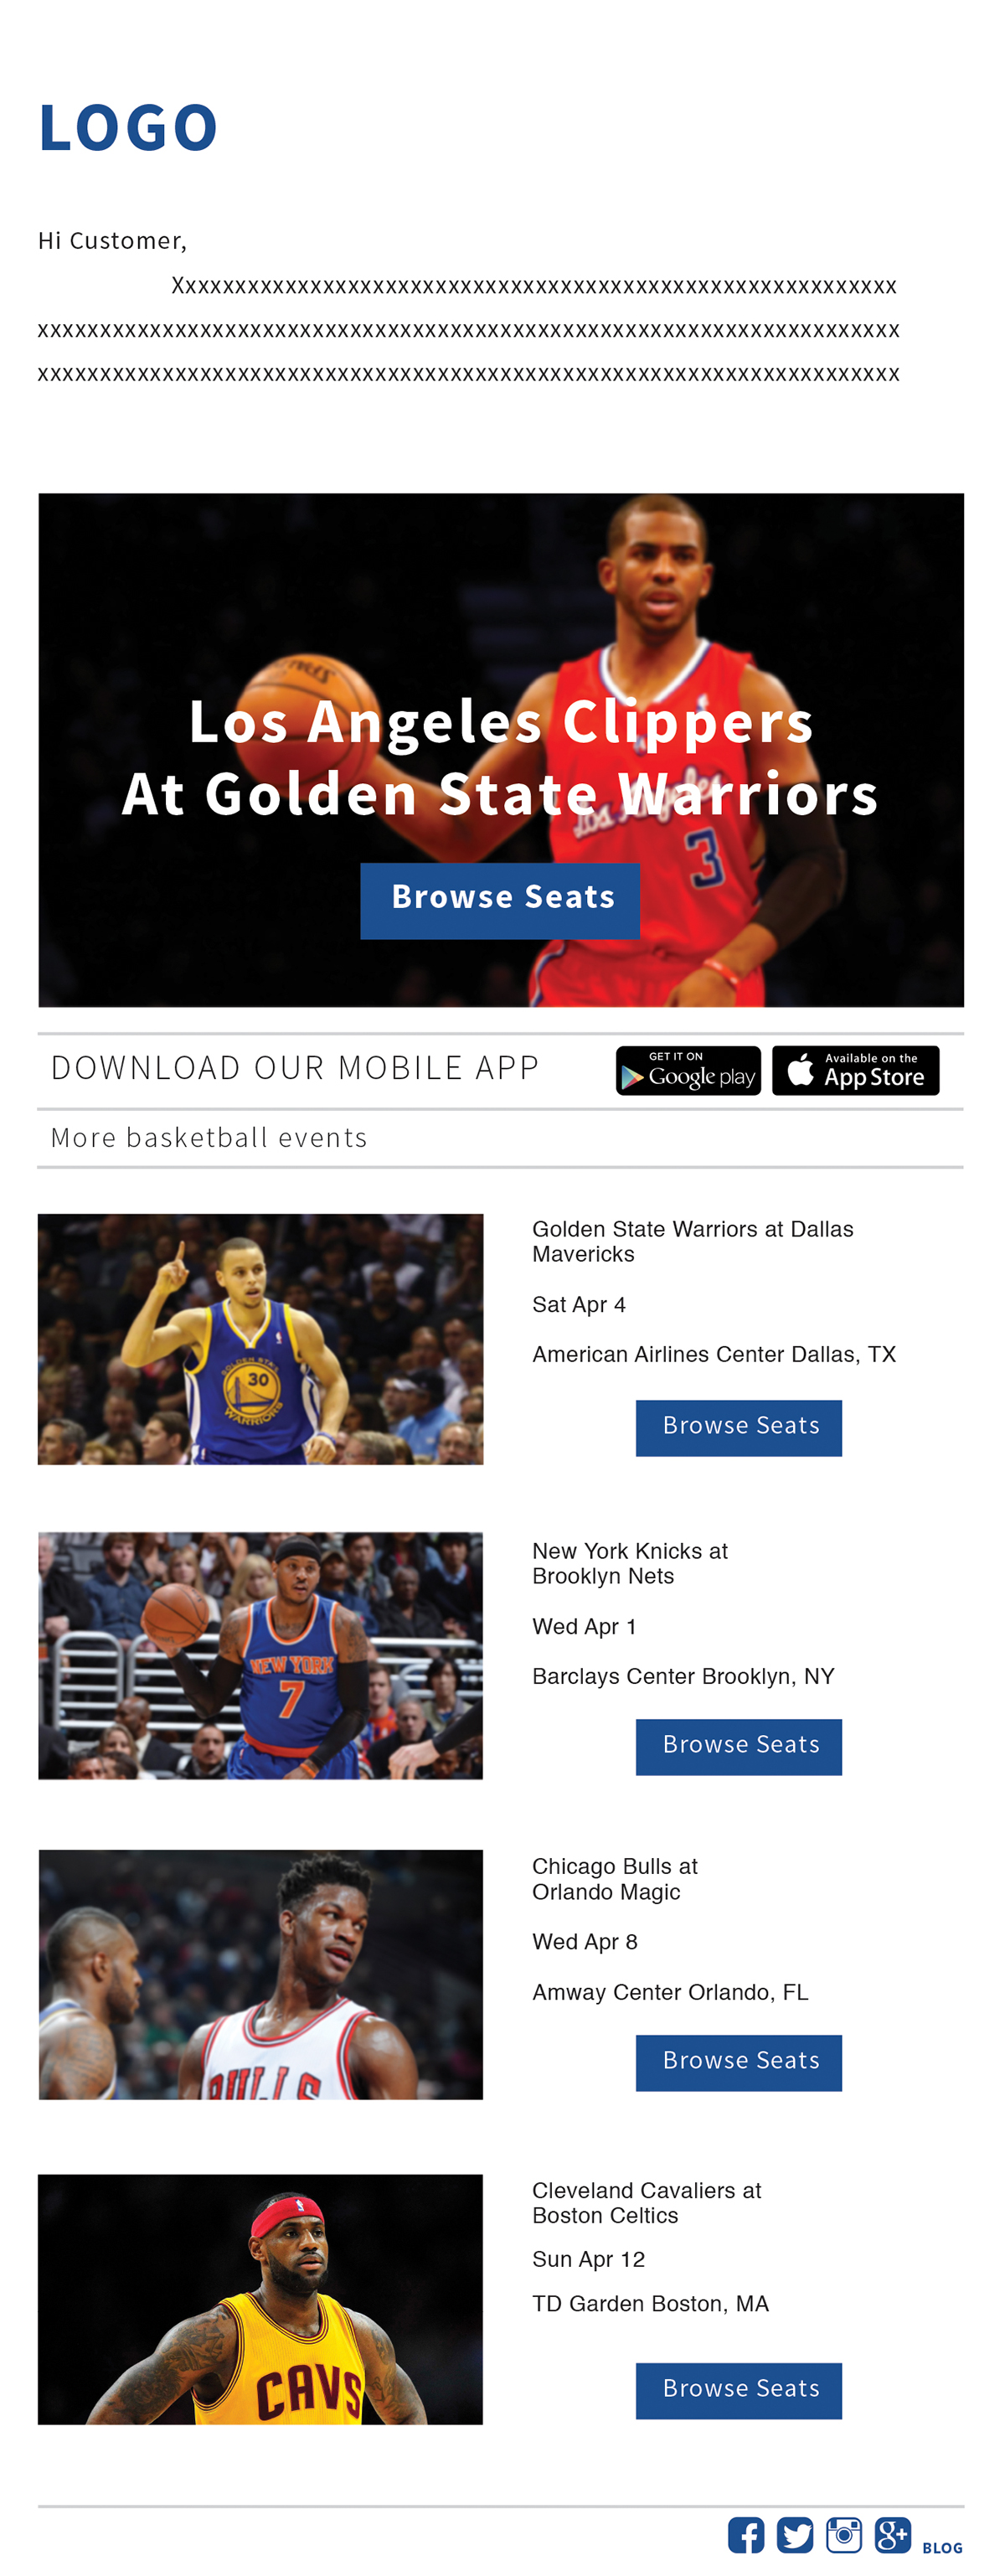 Adobe Portfolio basketball sports Promotion Web NBA Email LeBron James Carmelo Anthony steph curry jimmy butler Kemba Walker